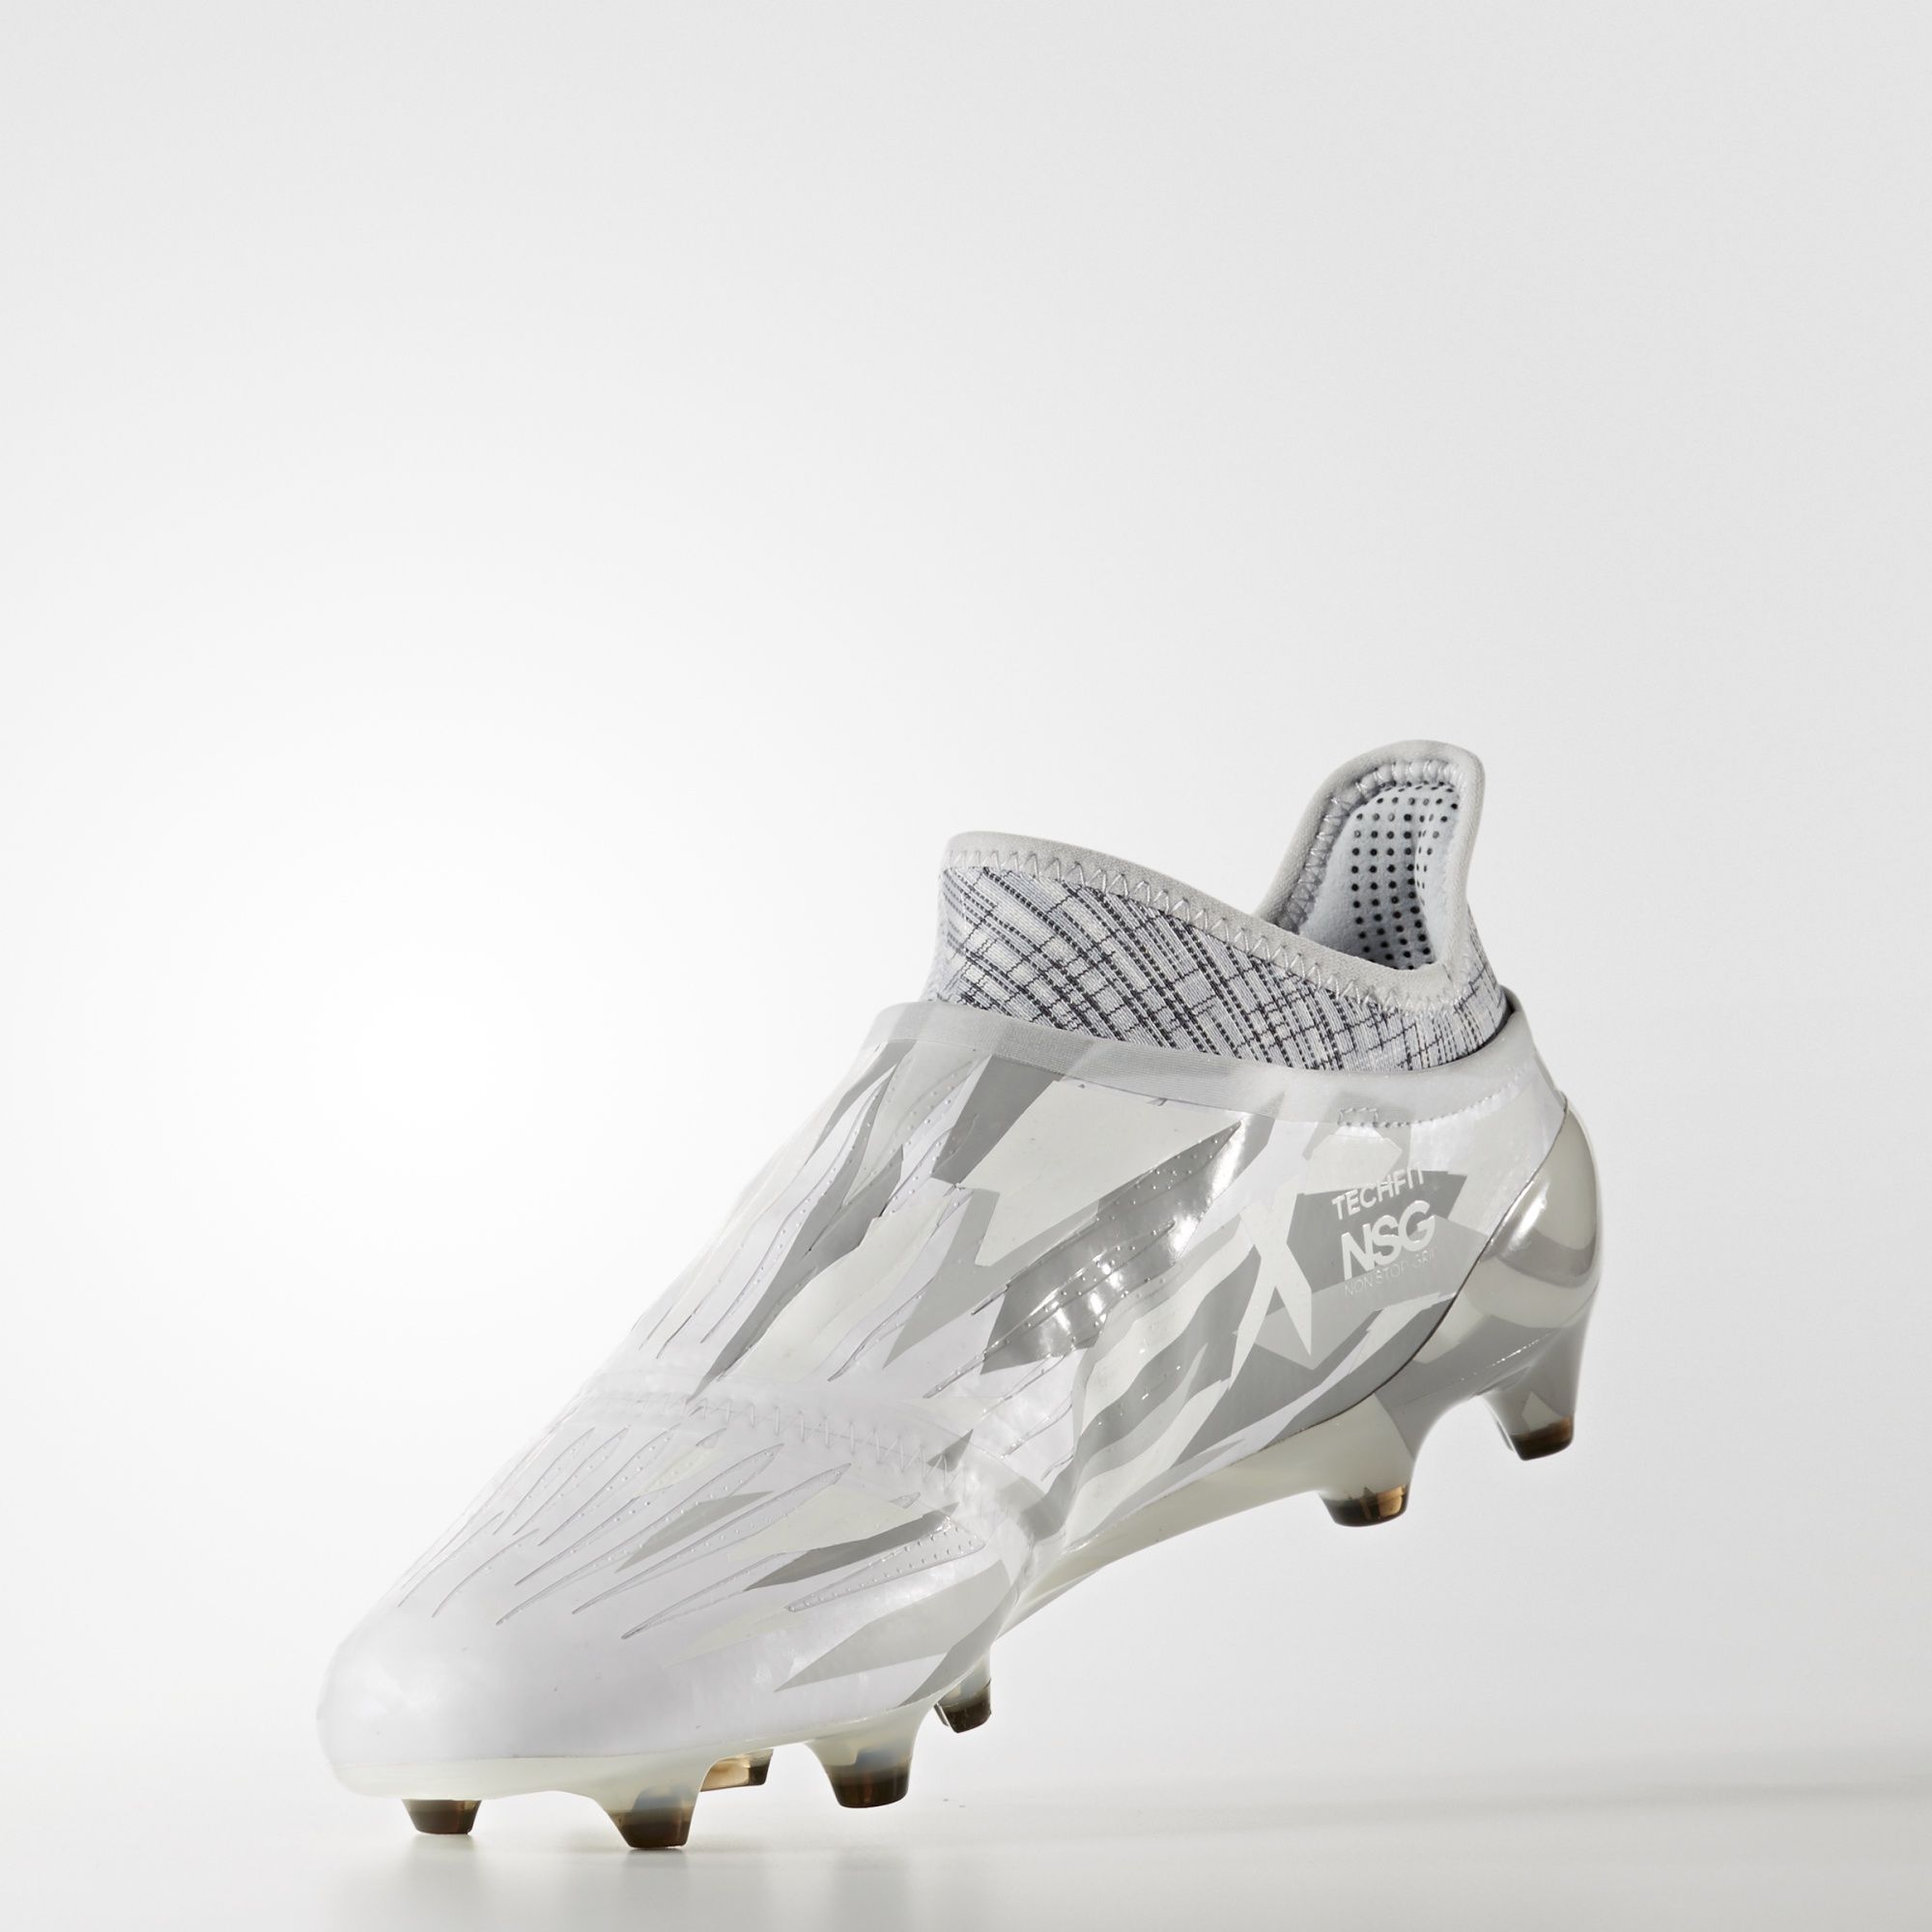 adidas 2017 scarpe calcio